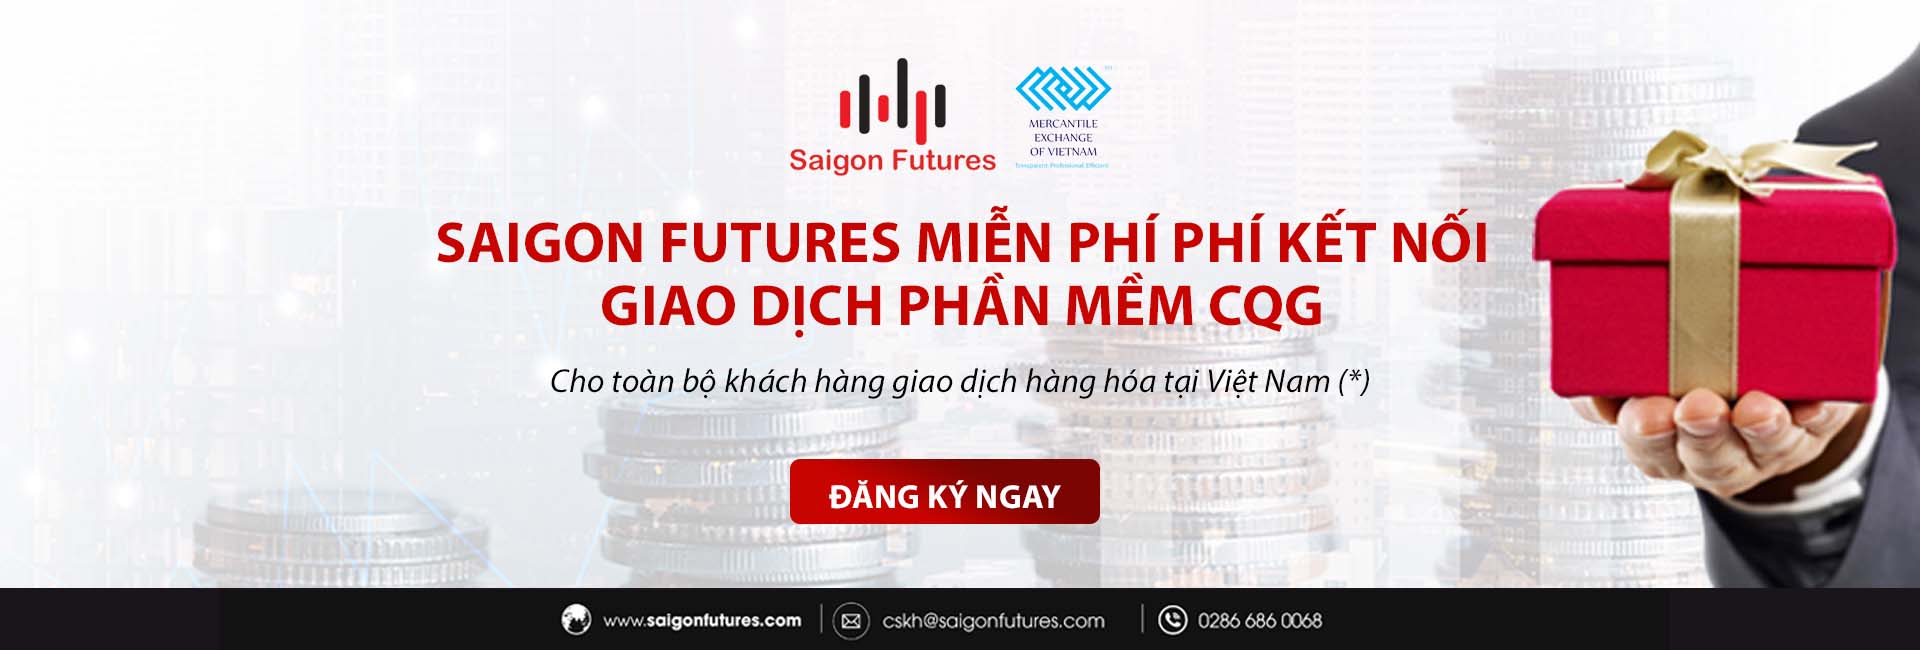 Công ty Cổ phần Saigon Futures